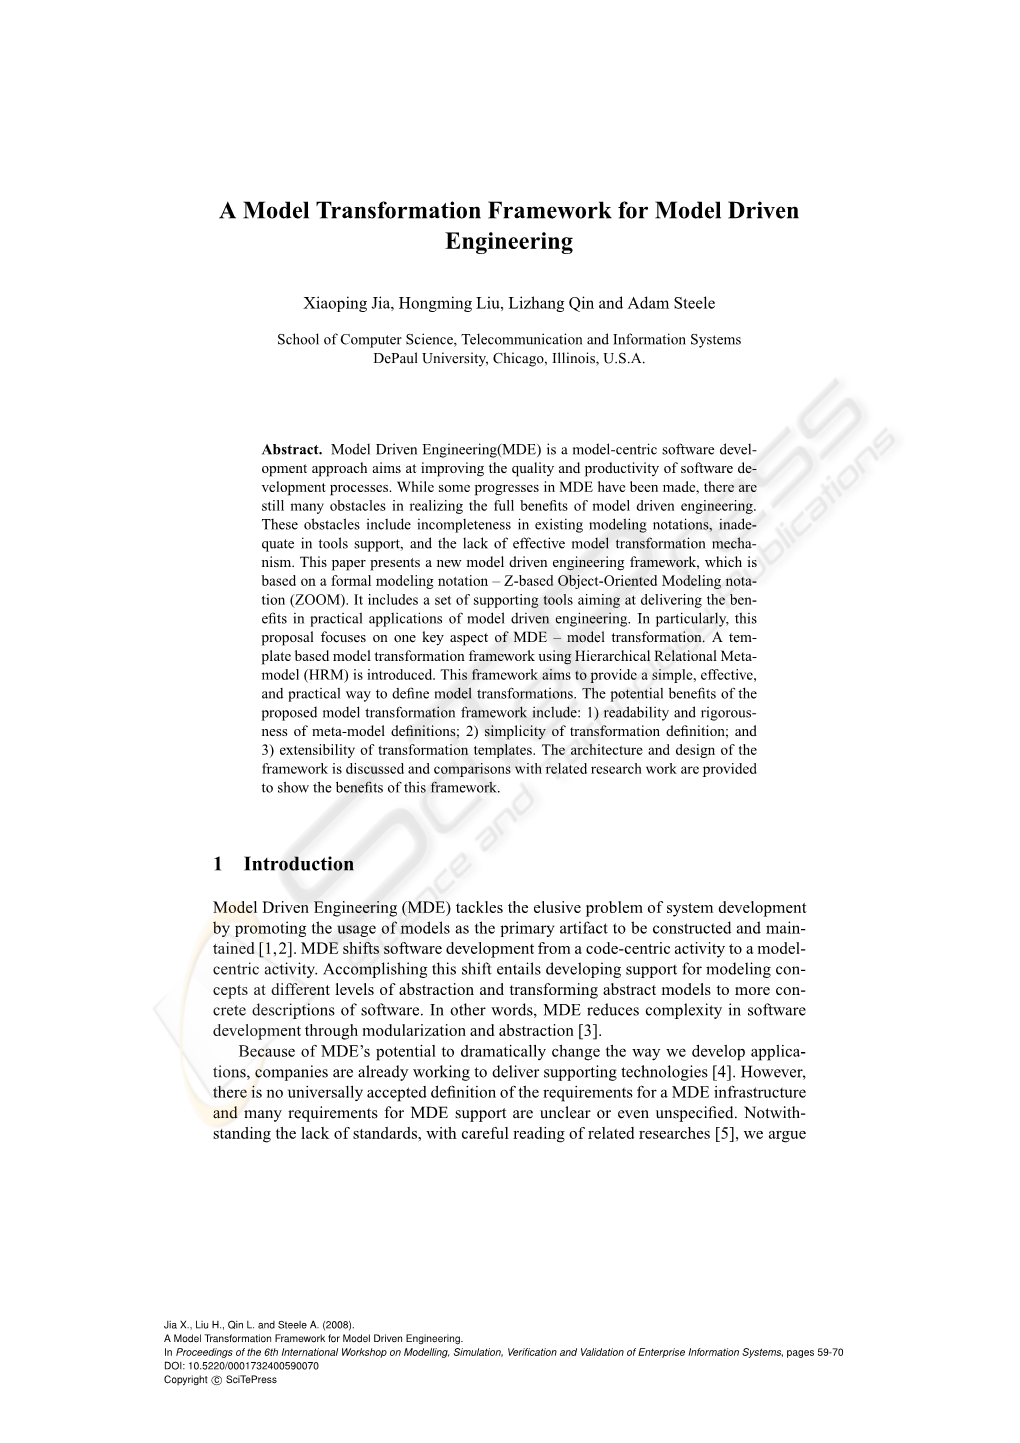 A Model Transformation Framework for Model Driven Engineering